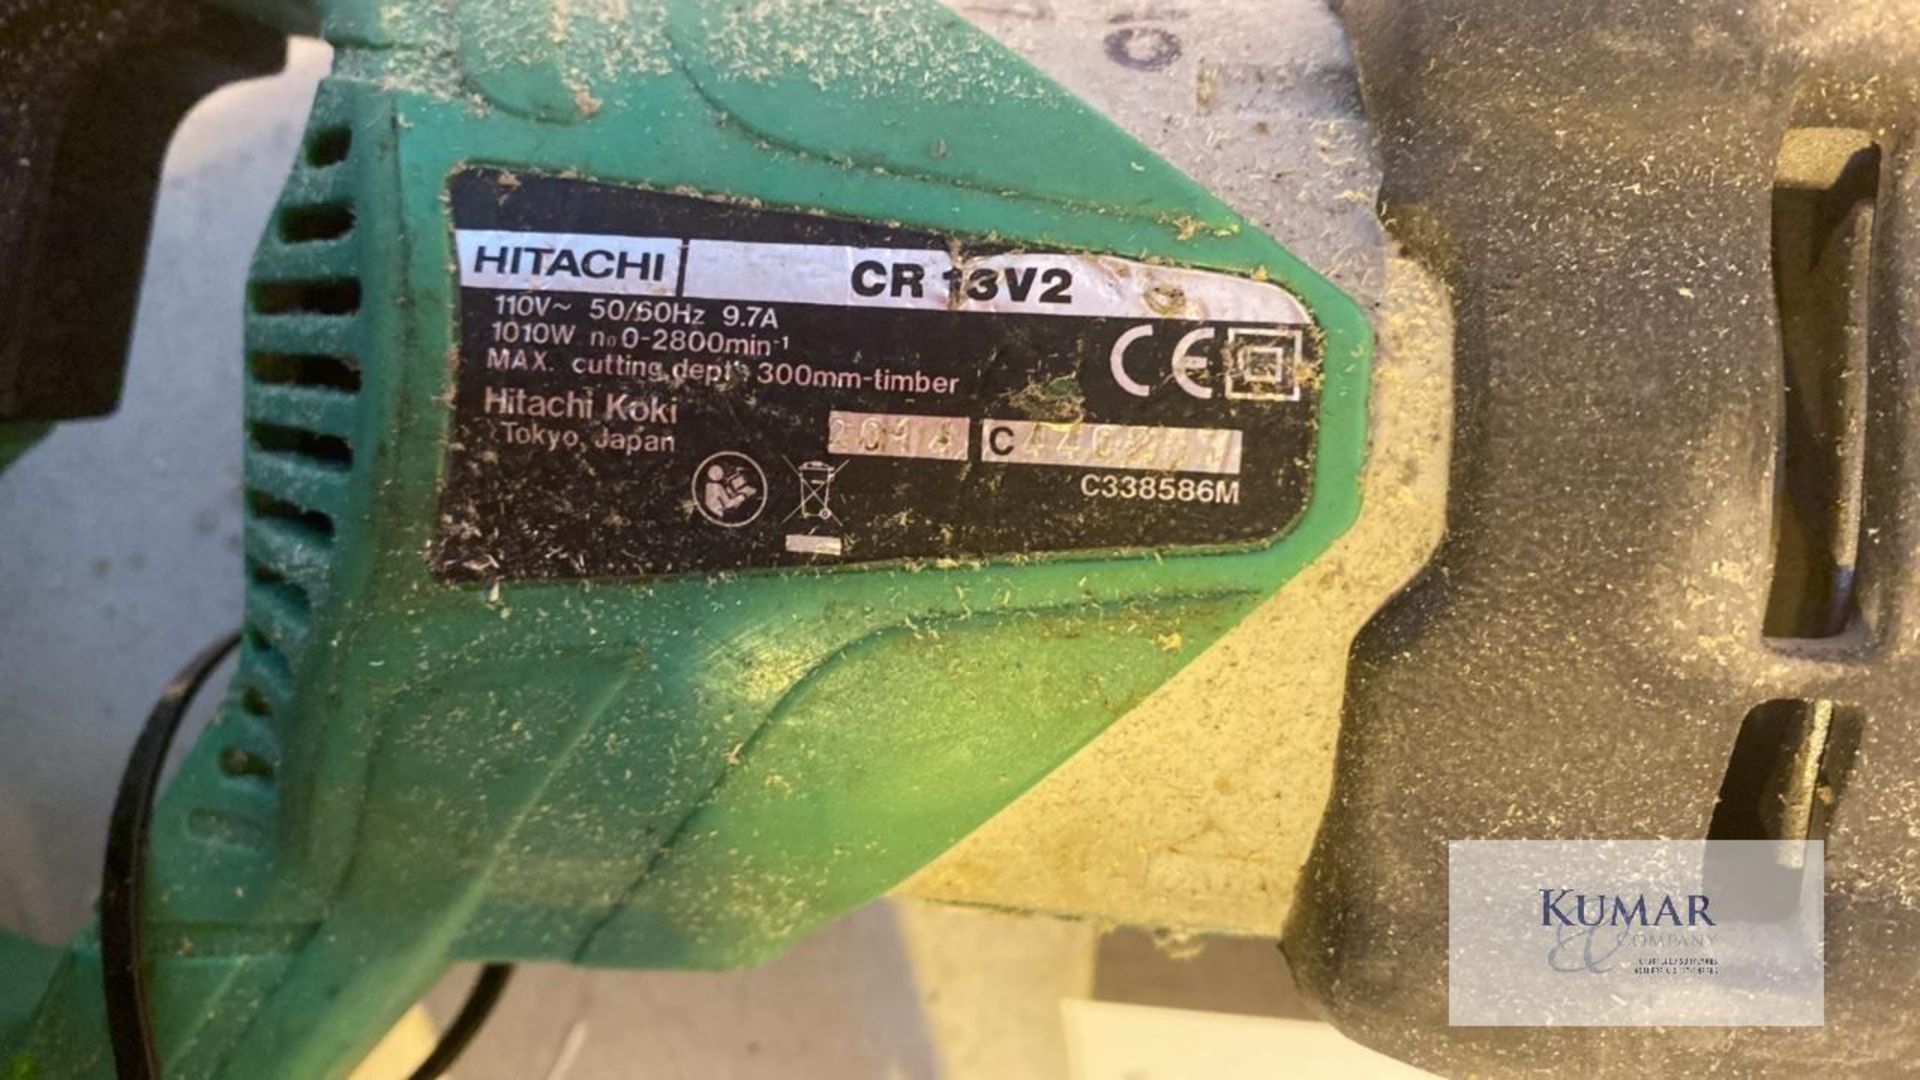 Hitachi CR13v2 110 Volt Reciprocating Saw - Image 2 of 3